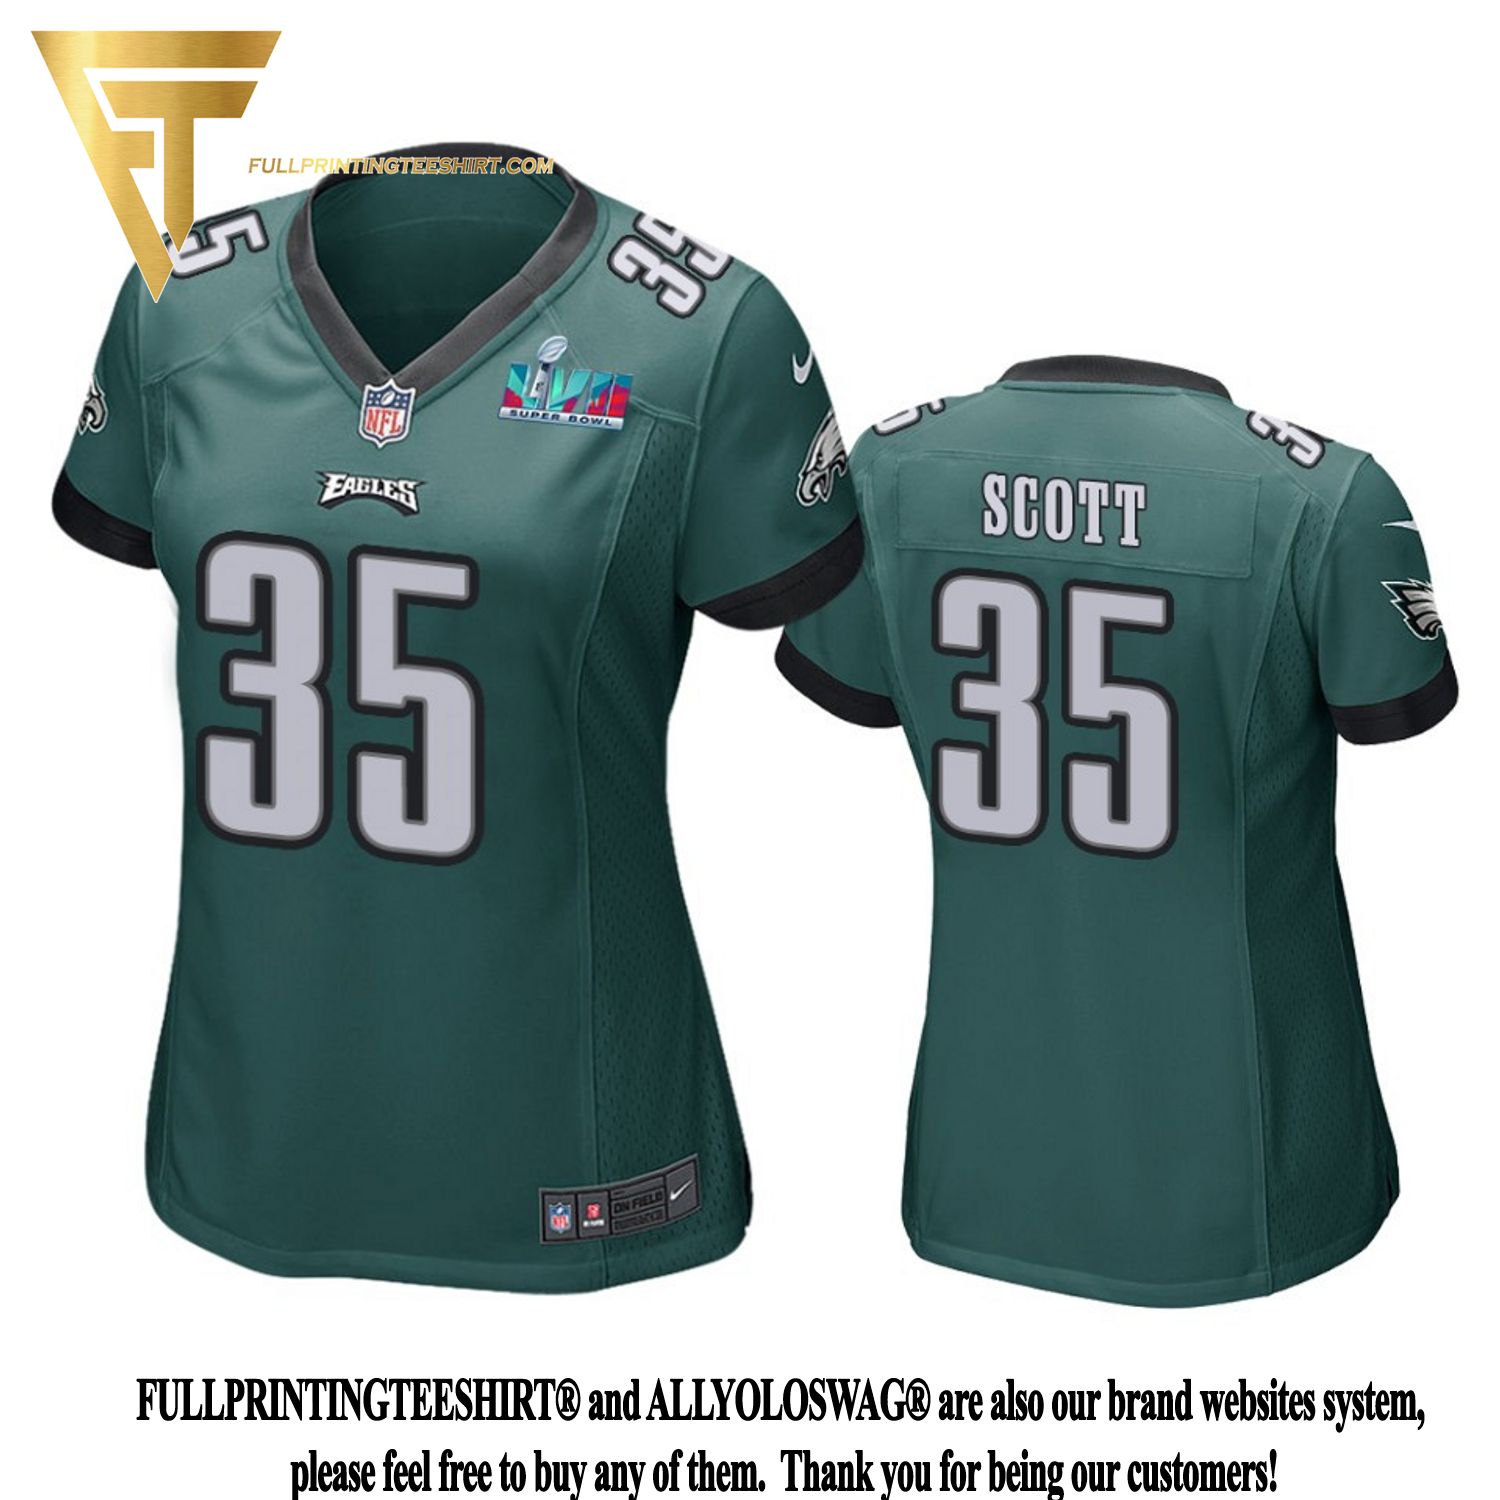 Top-selling Item] Boston Scott 35 Philadelphia Eagles Super Bowl